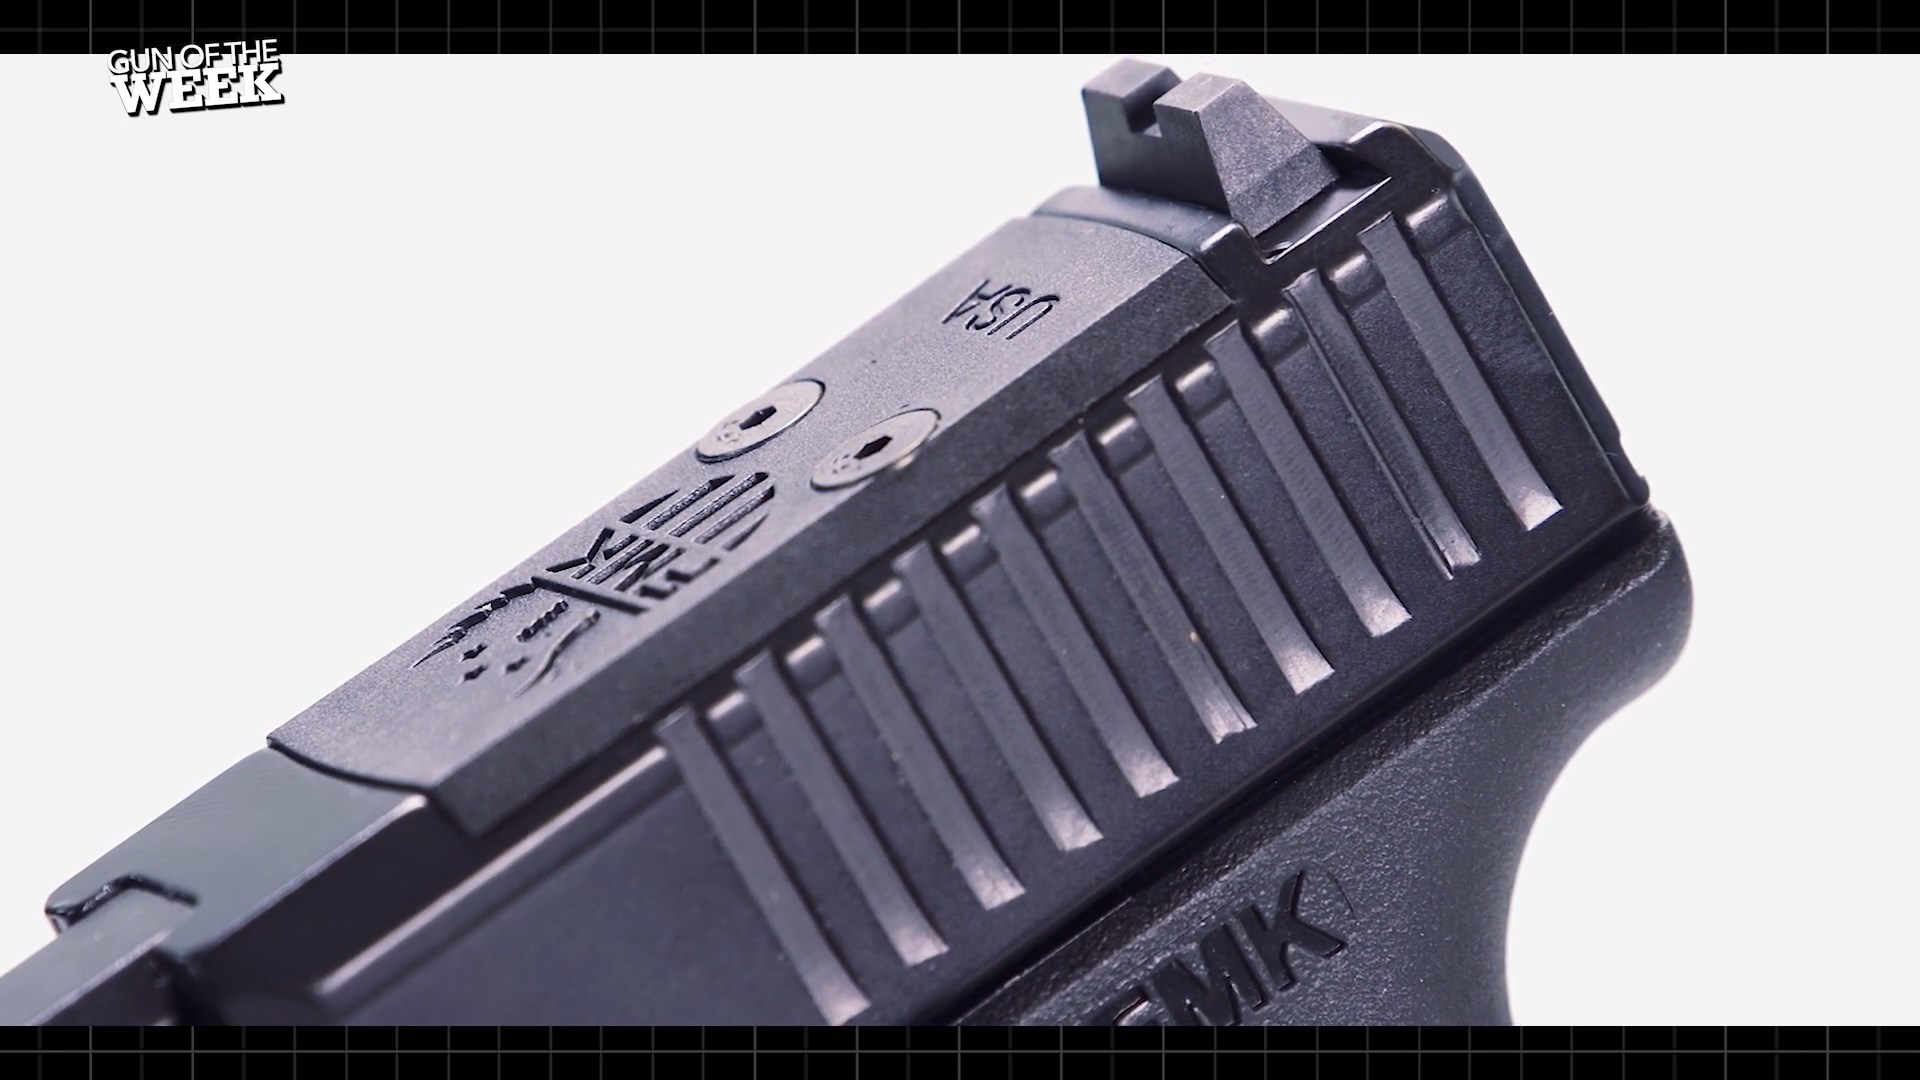 close-up view fmk pistol 9 mm optic cut slide example detail black metal gun parts